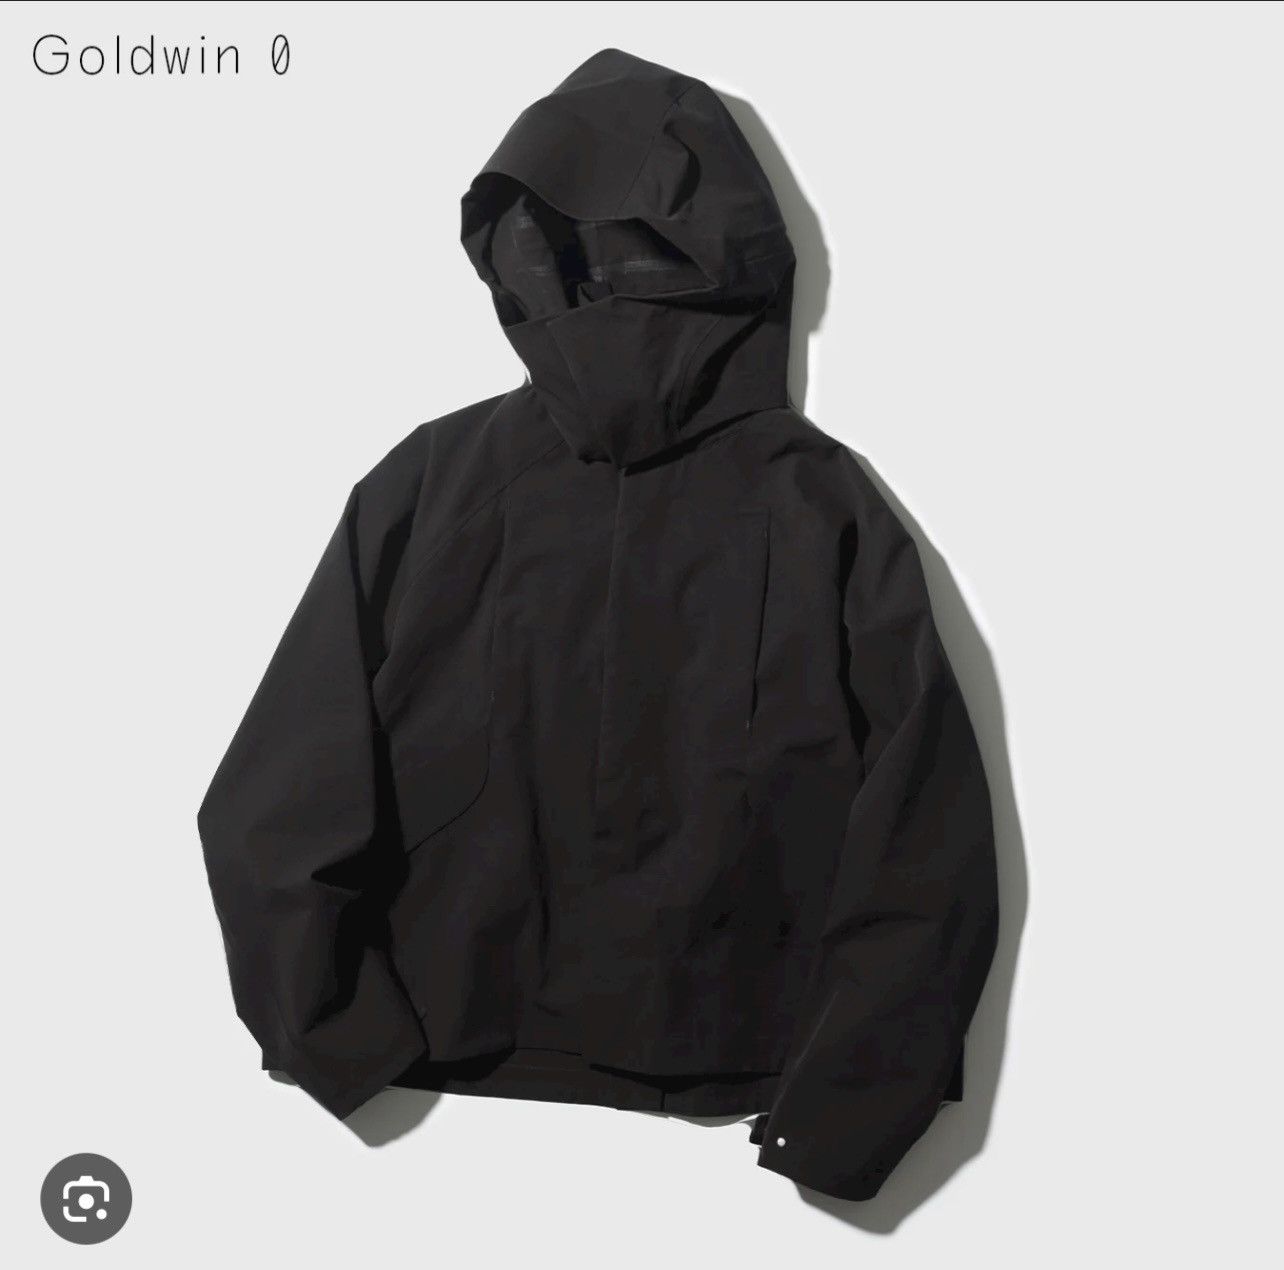 Goldwin GOLDWIN 0 double Cloth Hooded Coach Jacket Black | Grailed